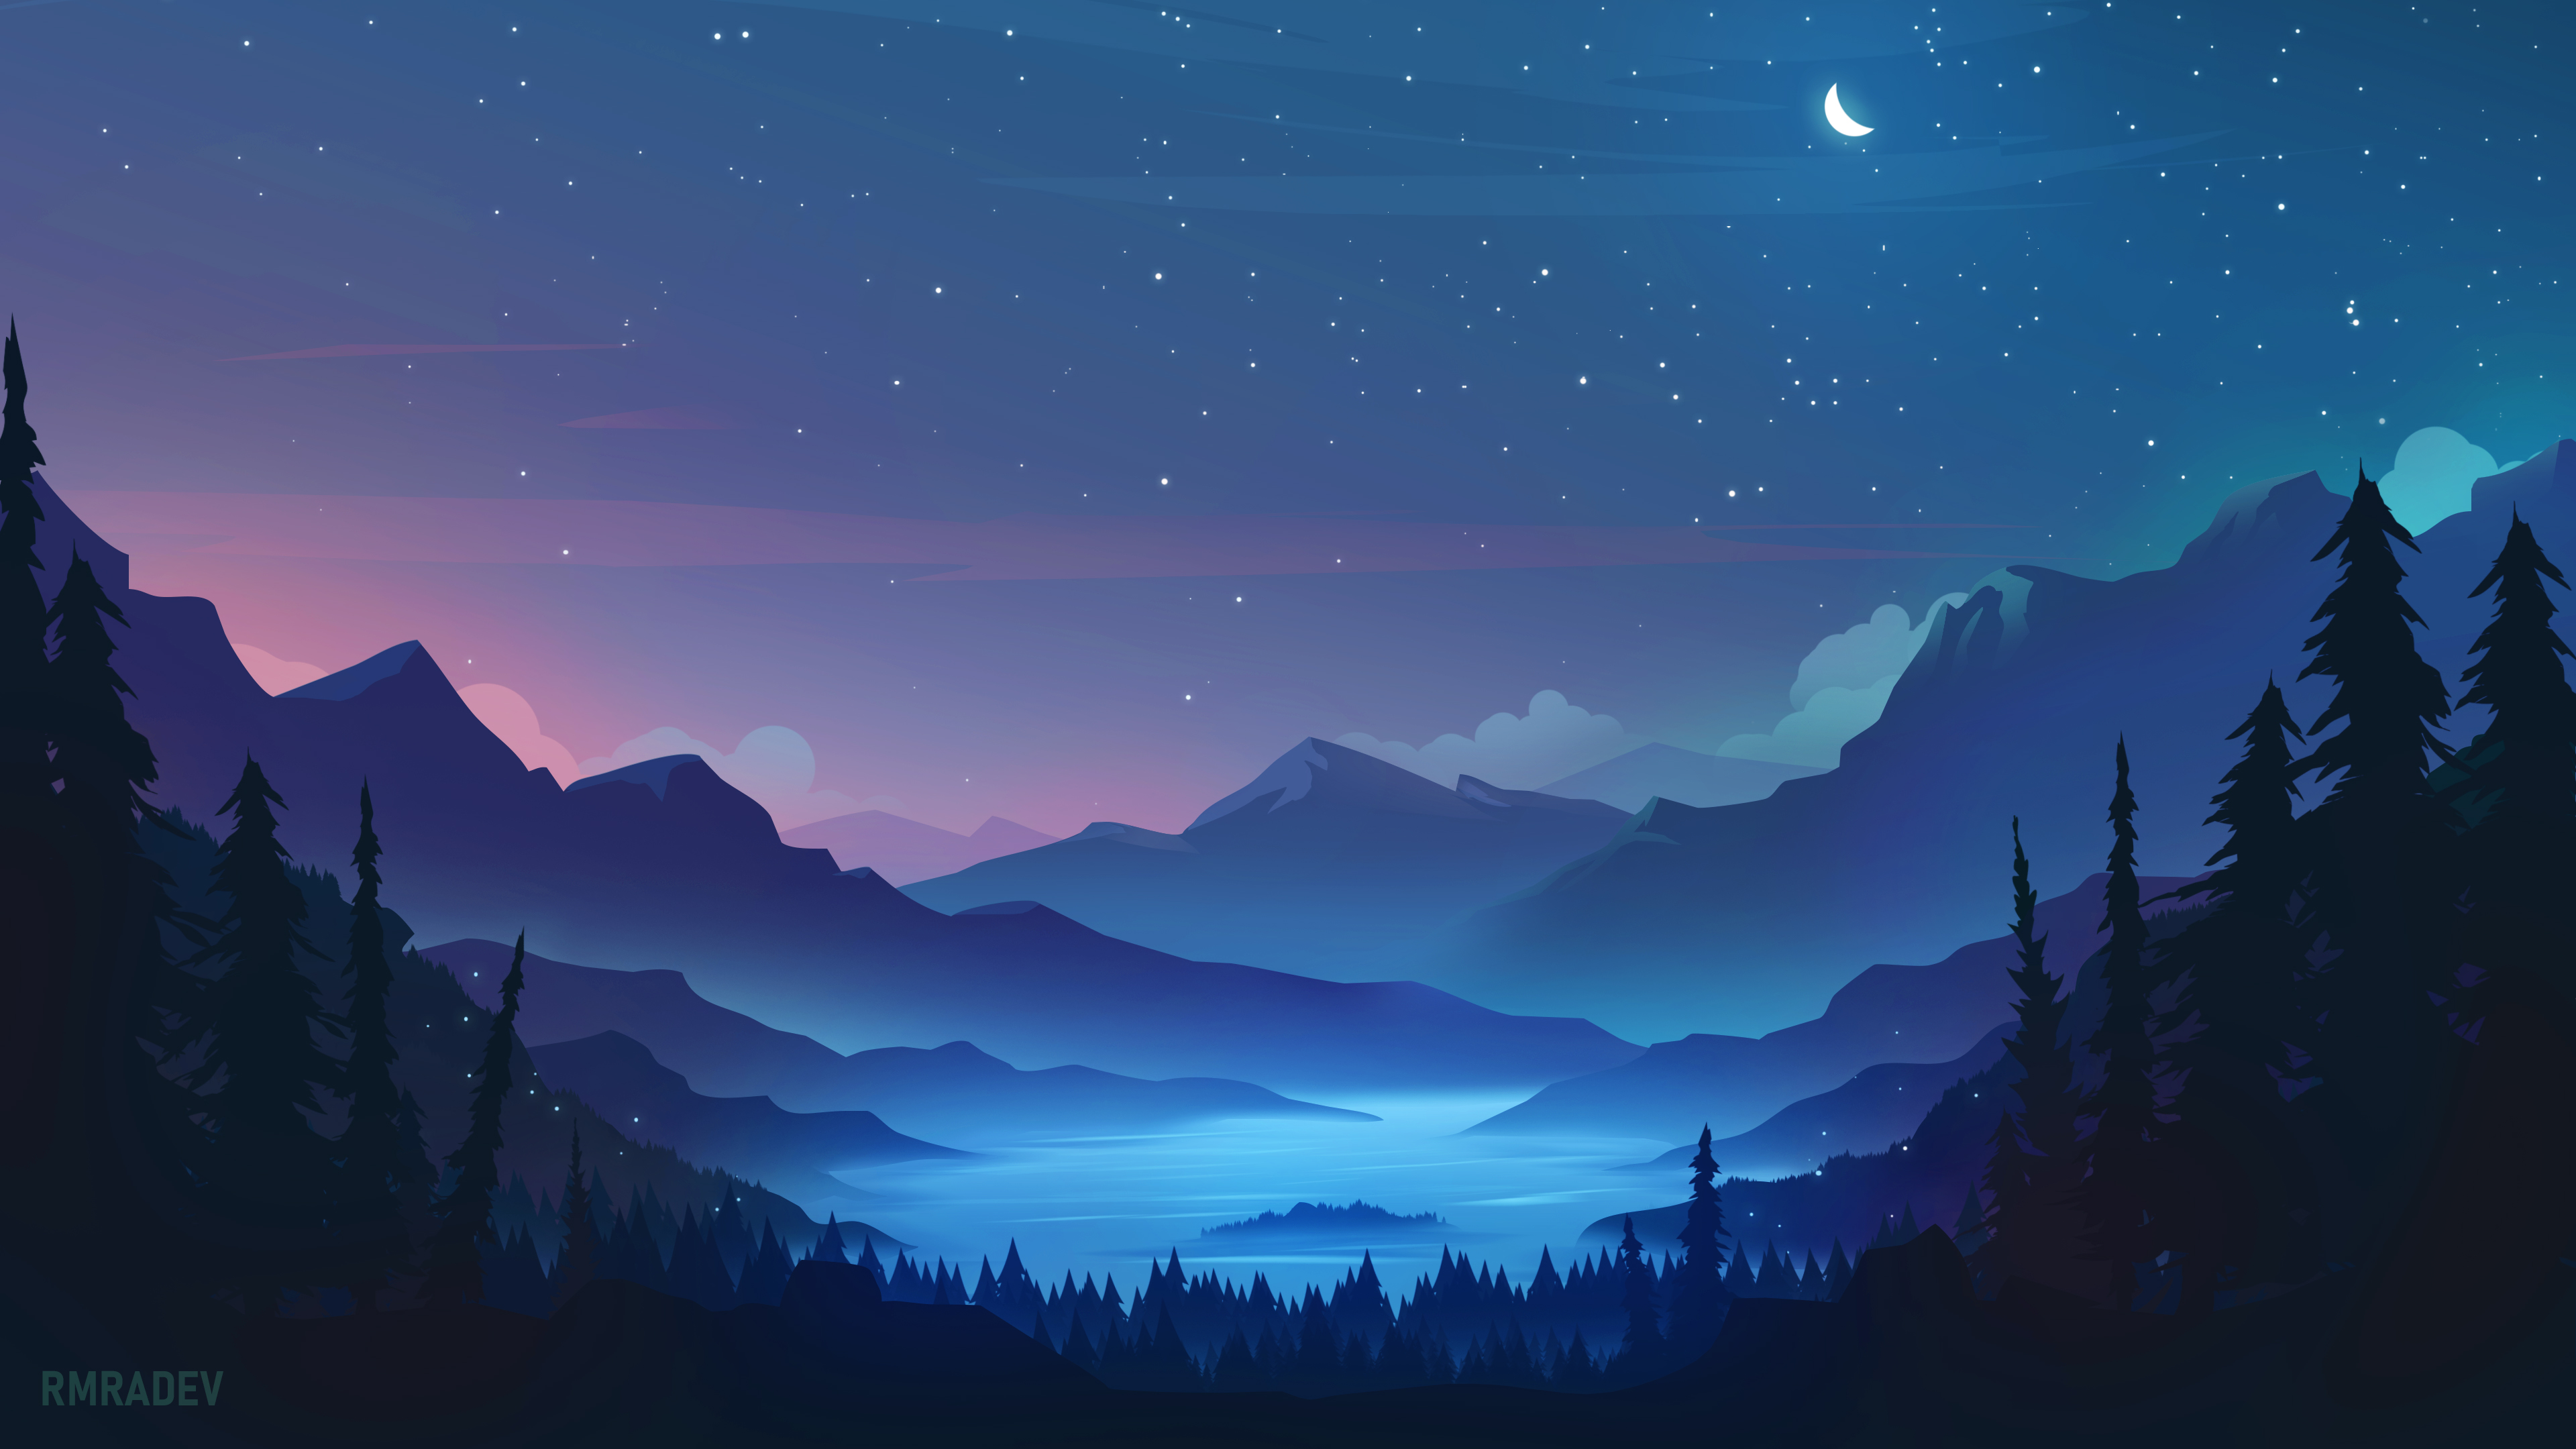 RmRadev Digital Art Artwork Illustration Landscape Nature Mountains Night Nightscape Lake Stars Star 3840x2160